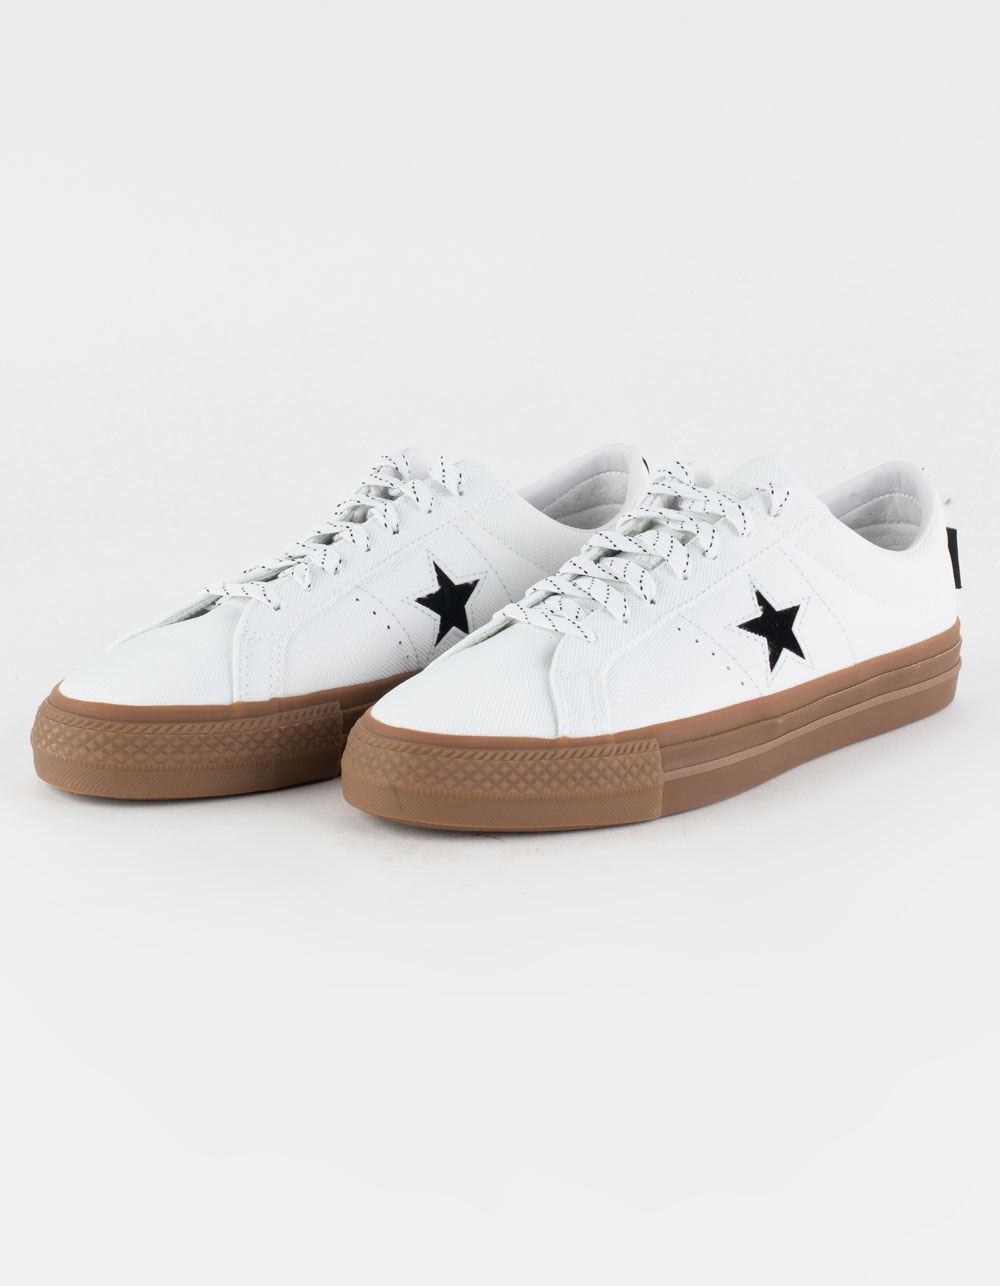 CONVERSE One Star Cordura Canvas Skate Shoes - WHT/BLK Tillys